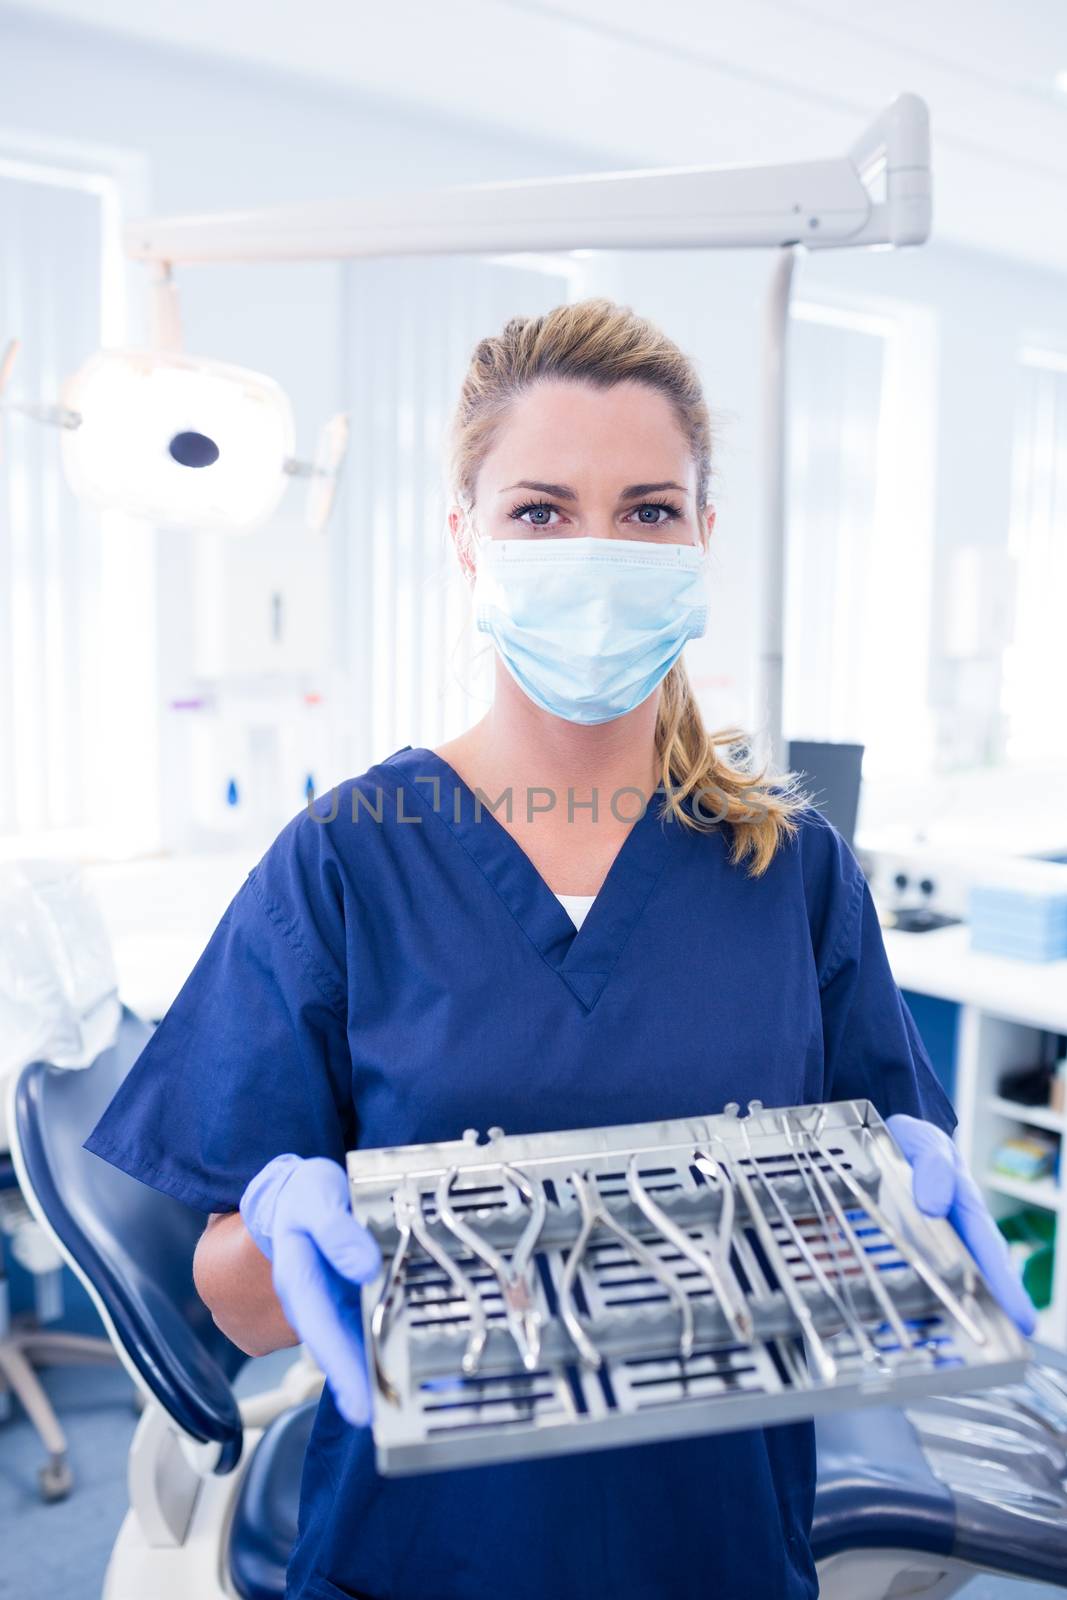 Dentist in blue scrubs offering tray of tools by Wavebreakmedia